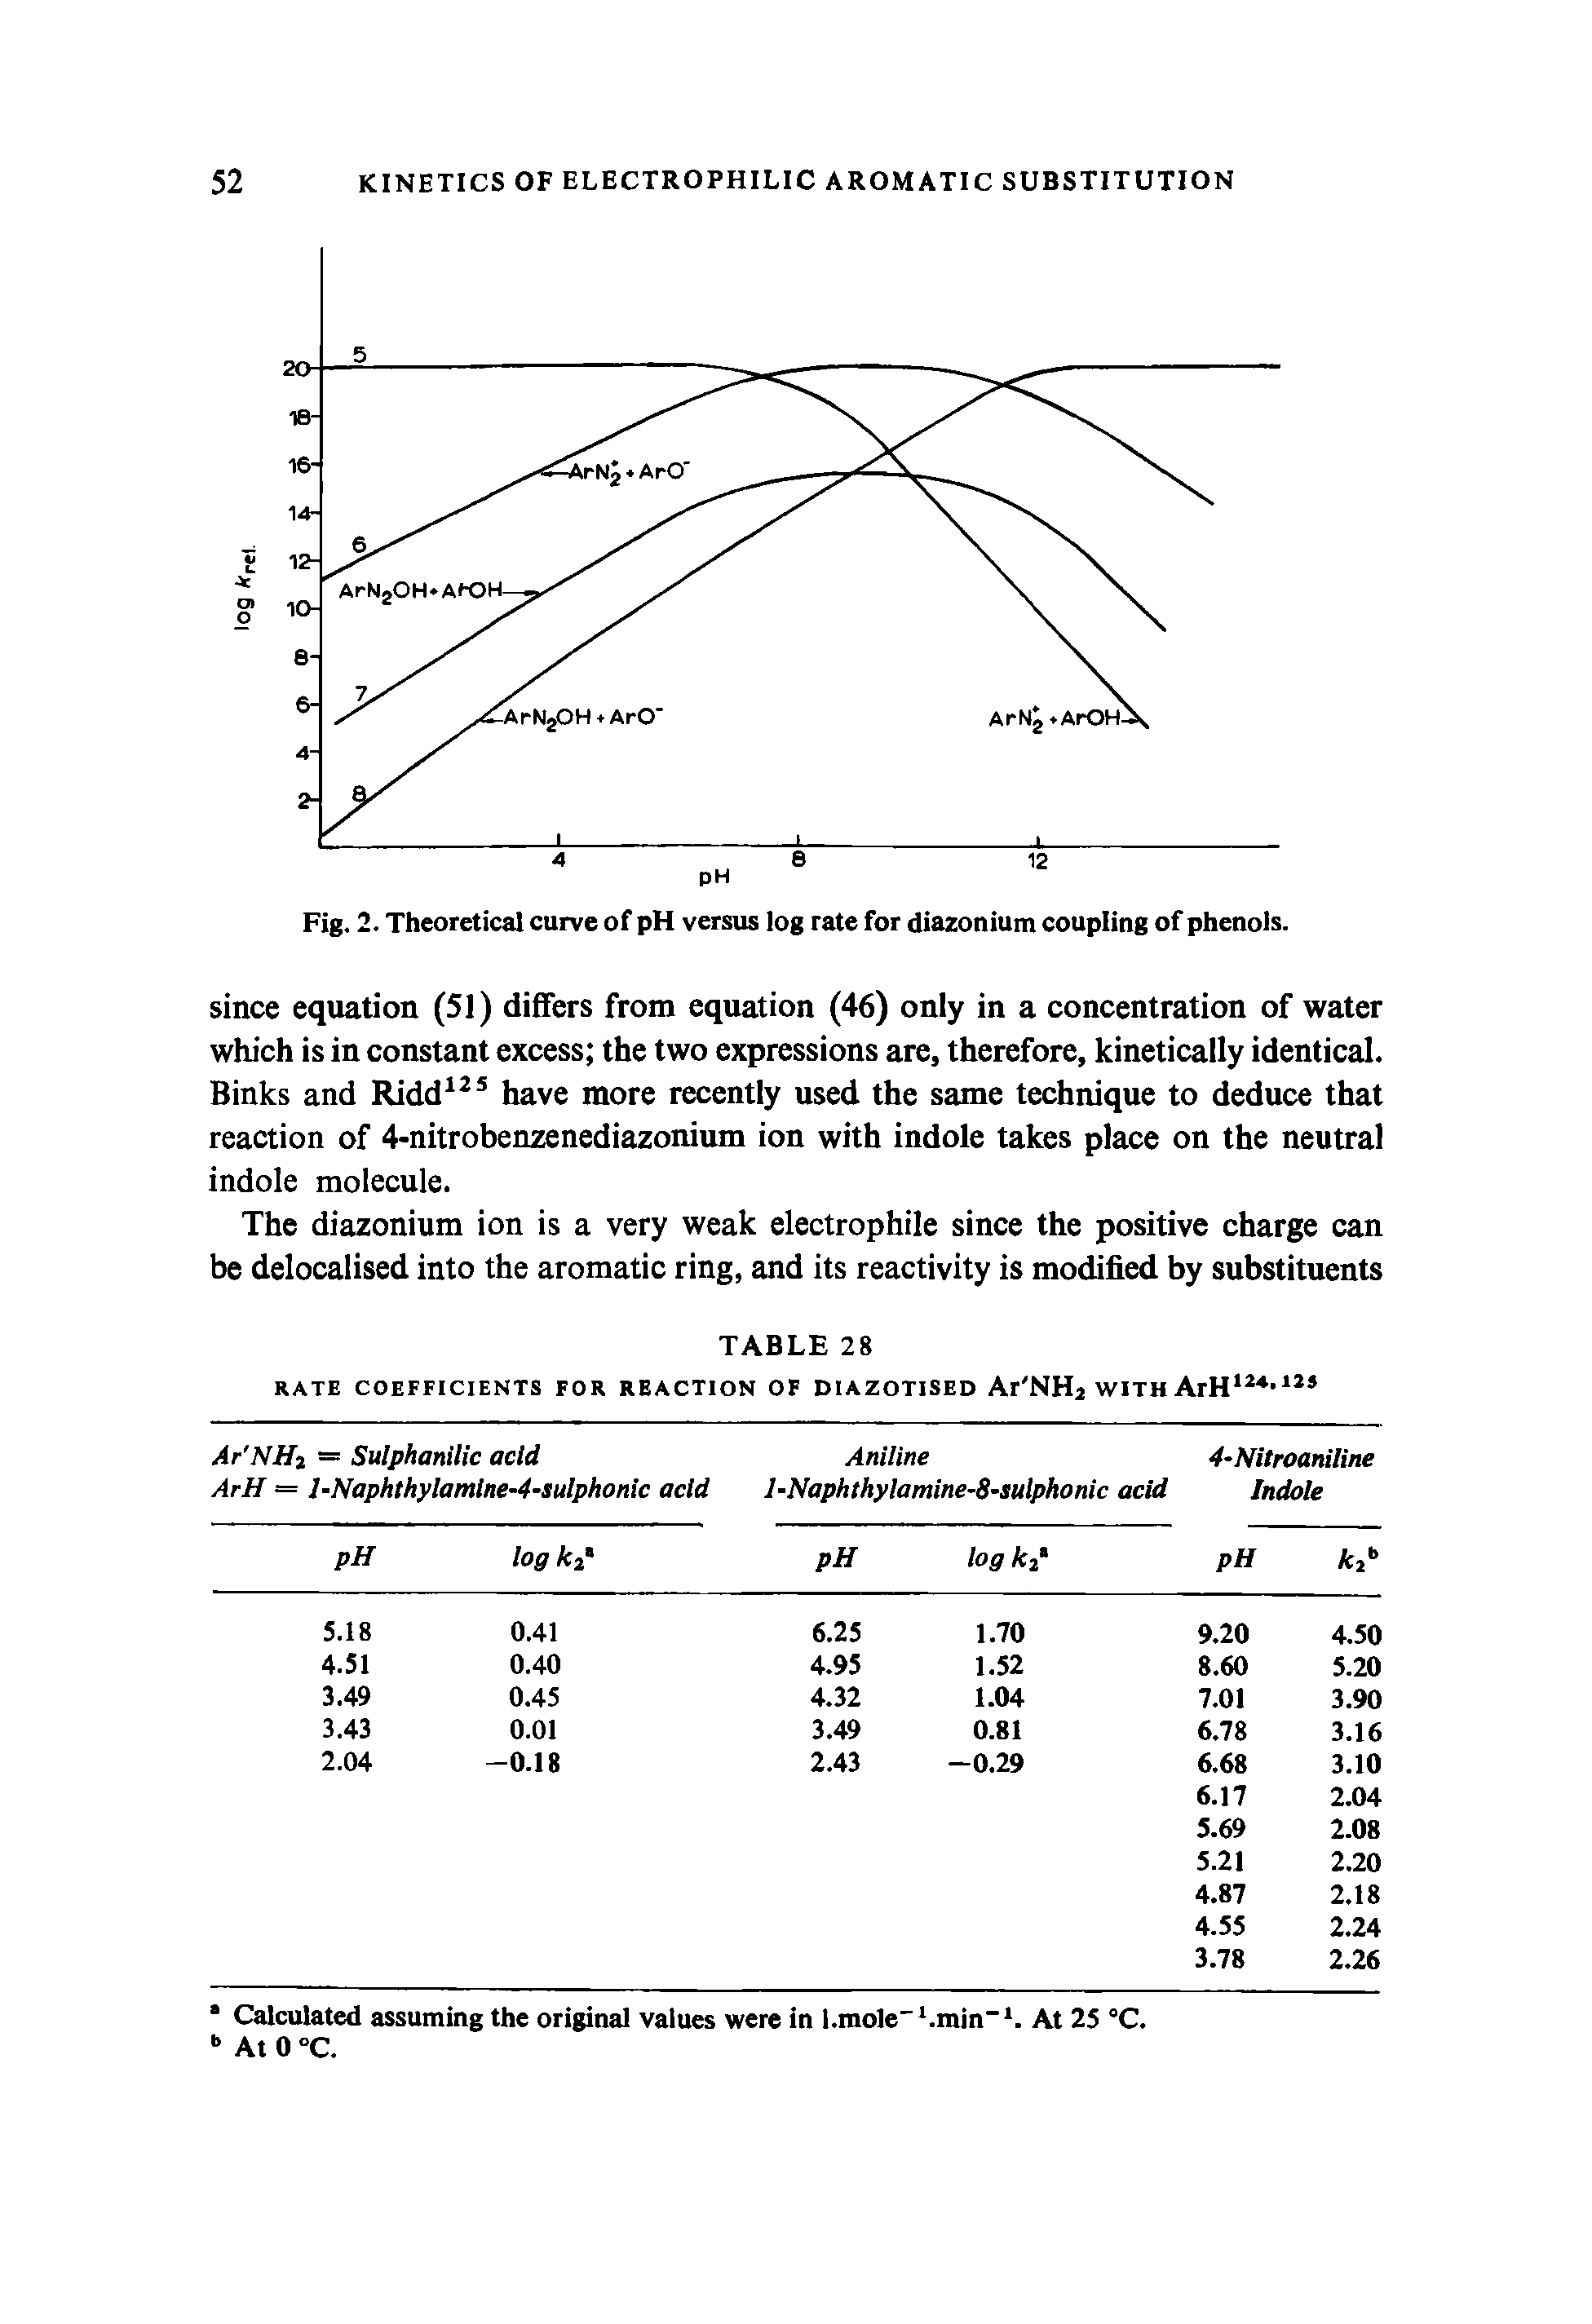 Fig. 2. Theoretical curve of pH versus log rate for diazonium coupling of phenols.